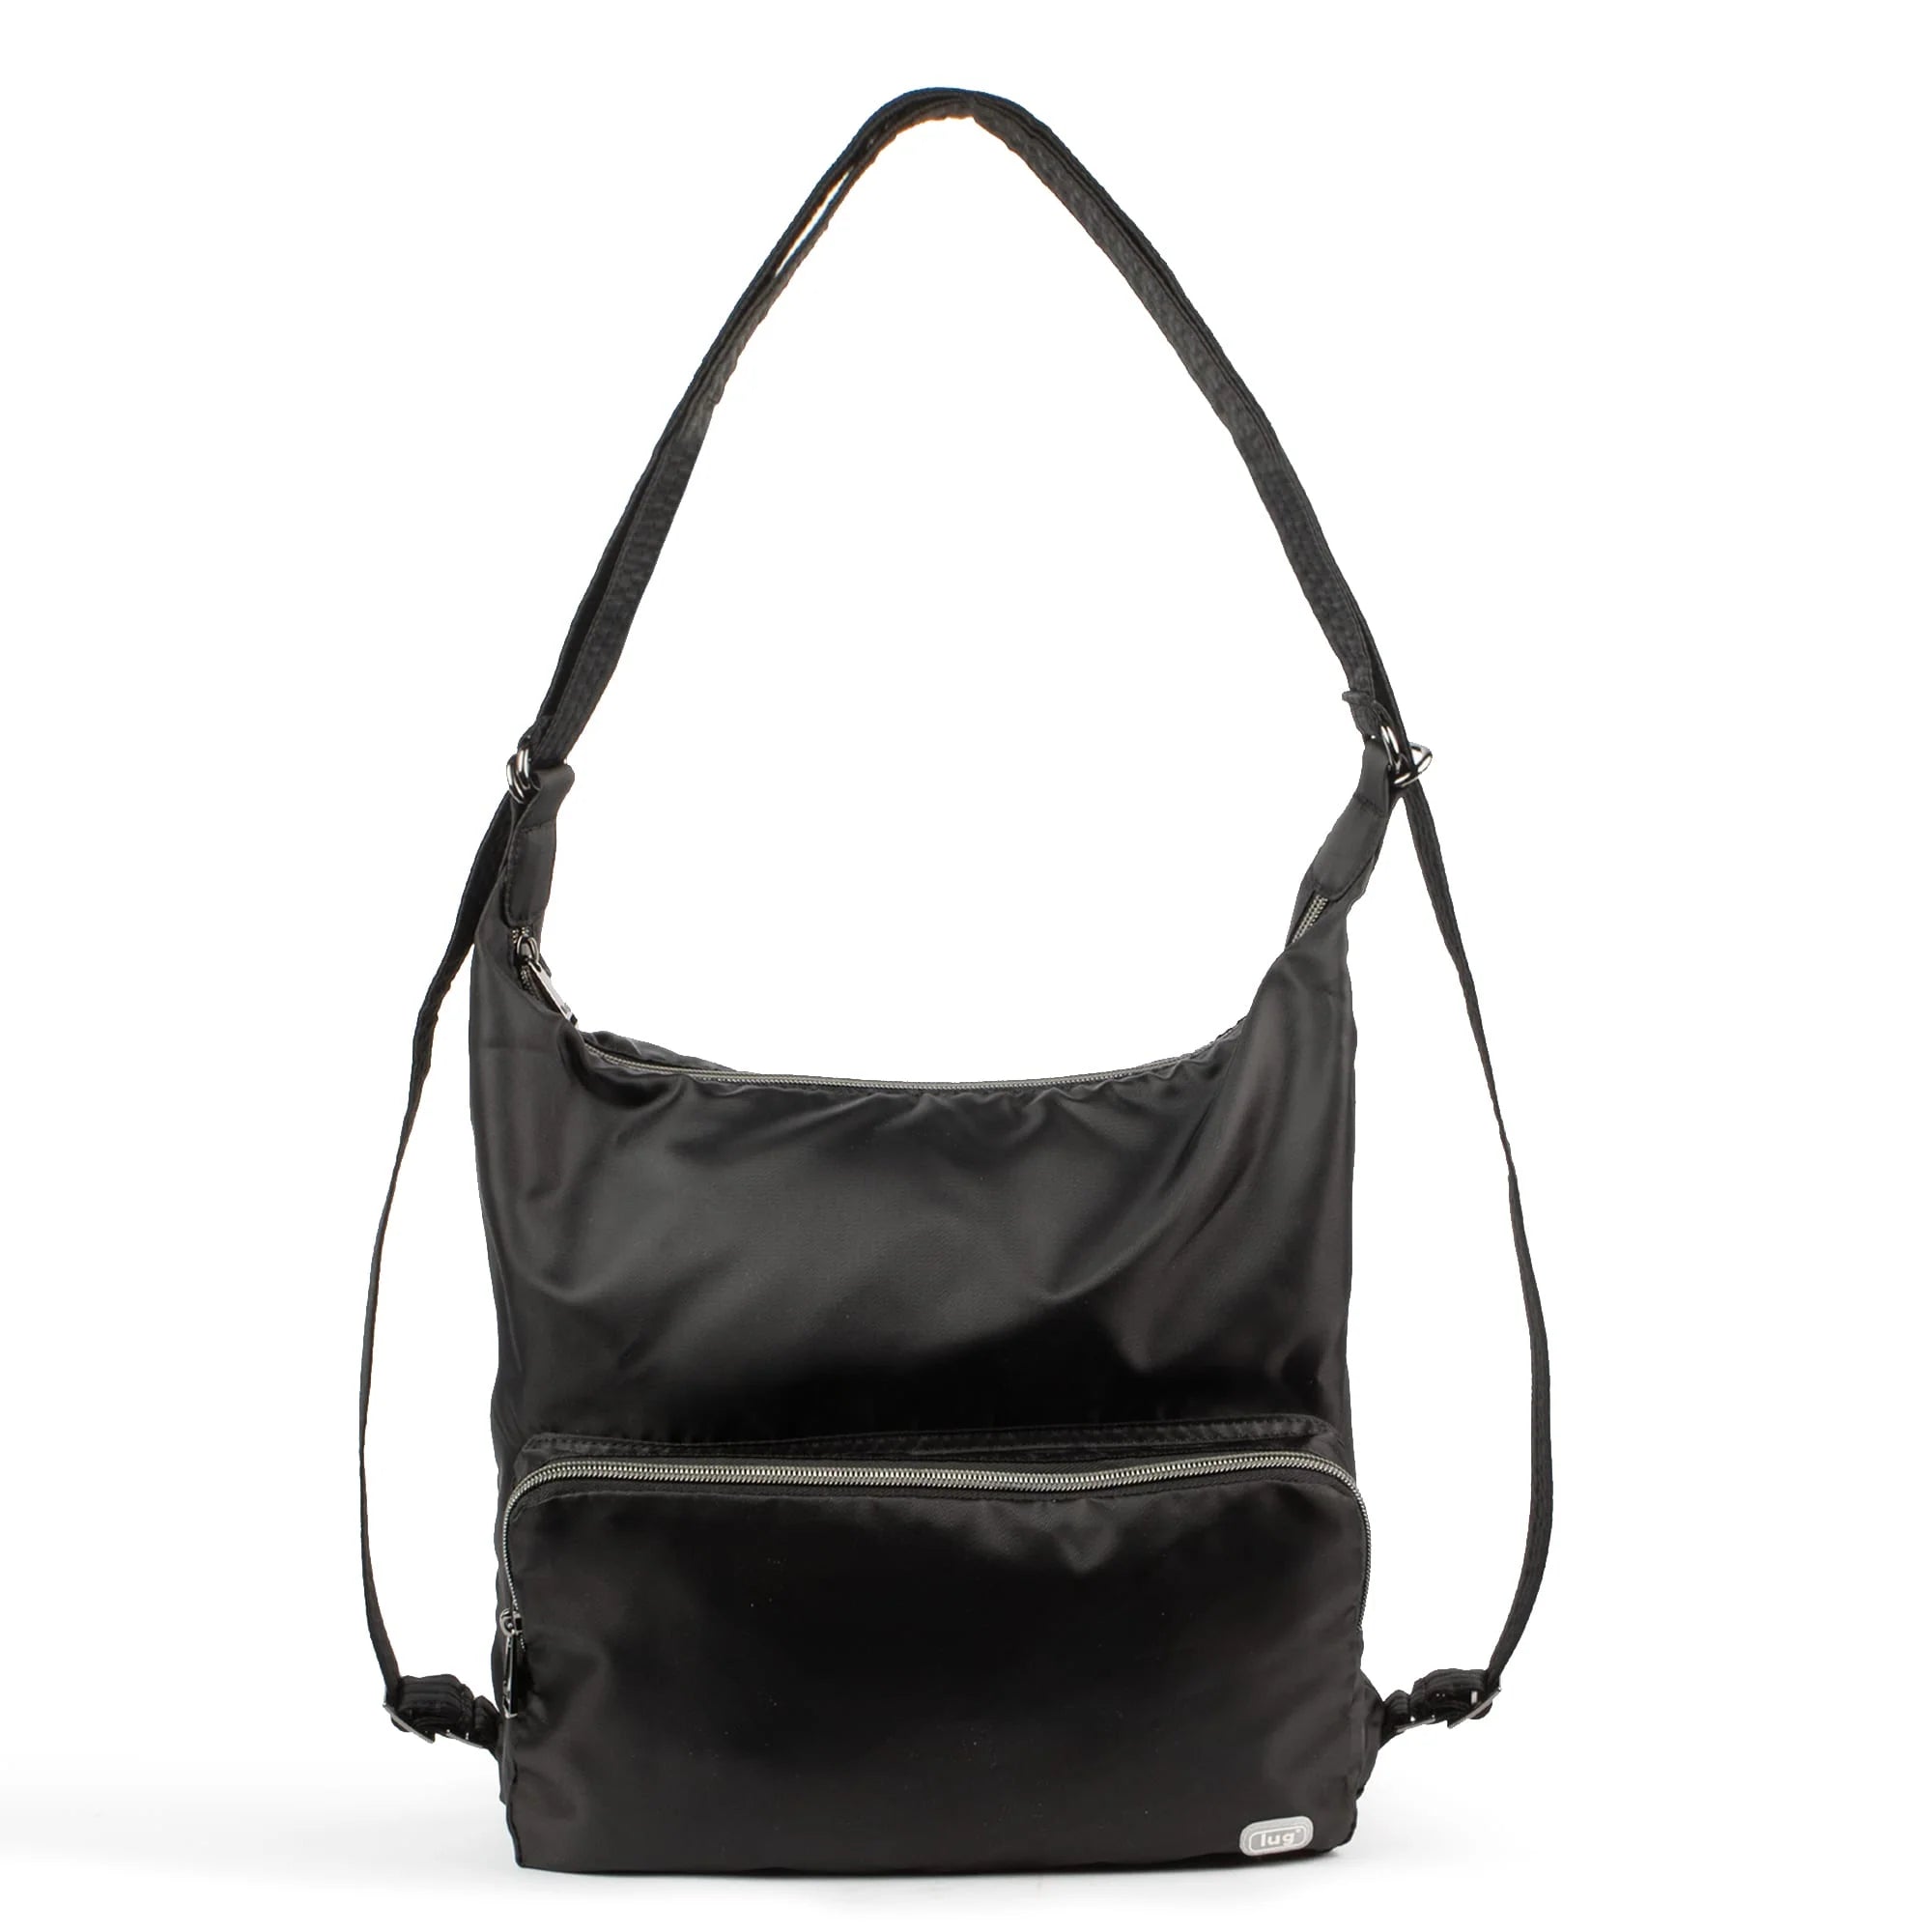 Zipliner Packable Convertible Hobo Bag - Black - Blesket Canada